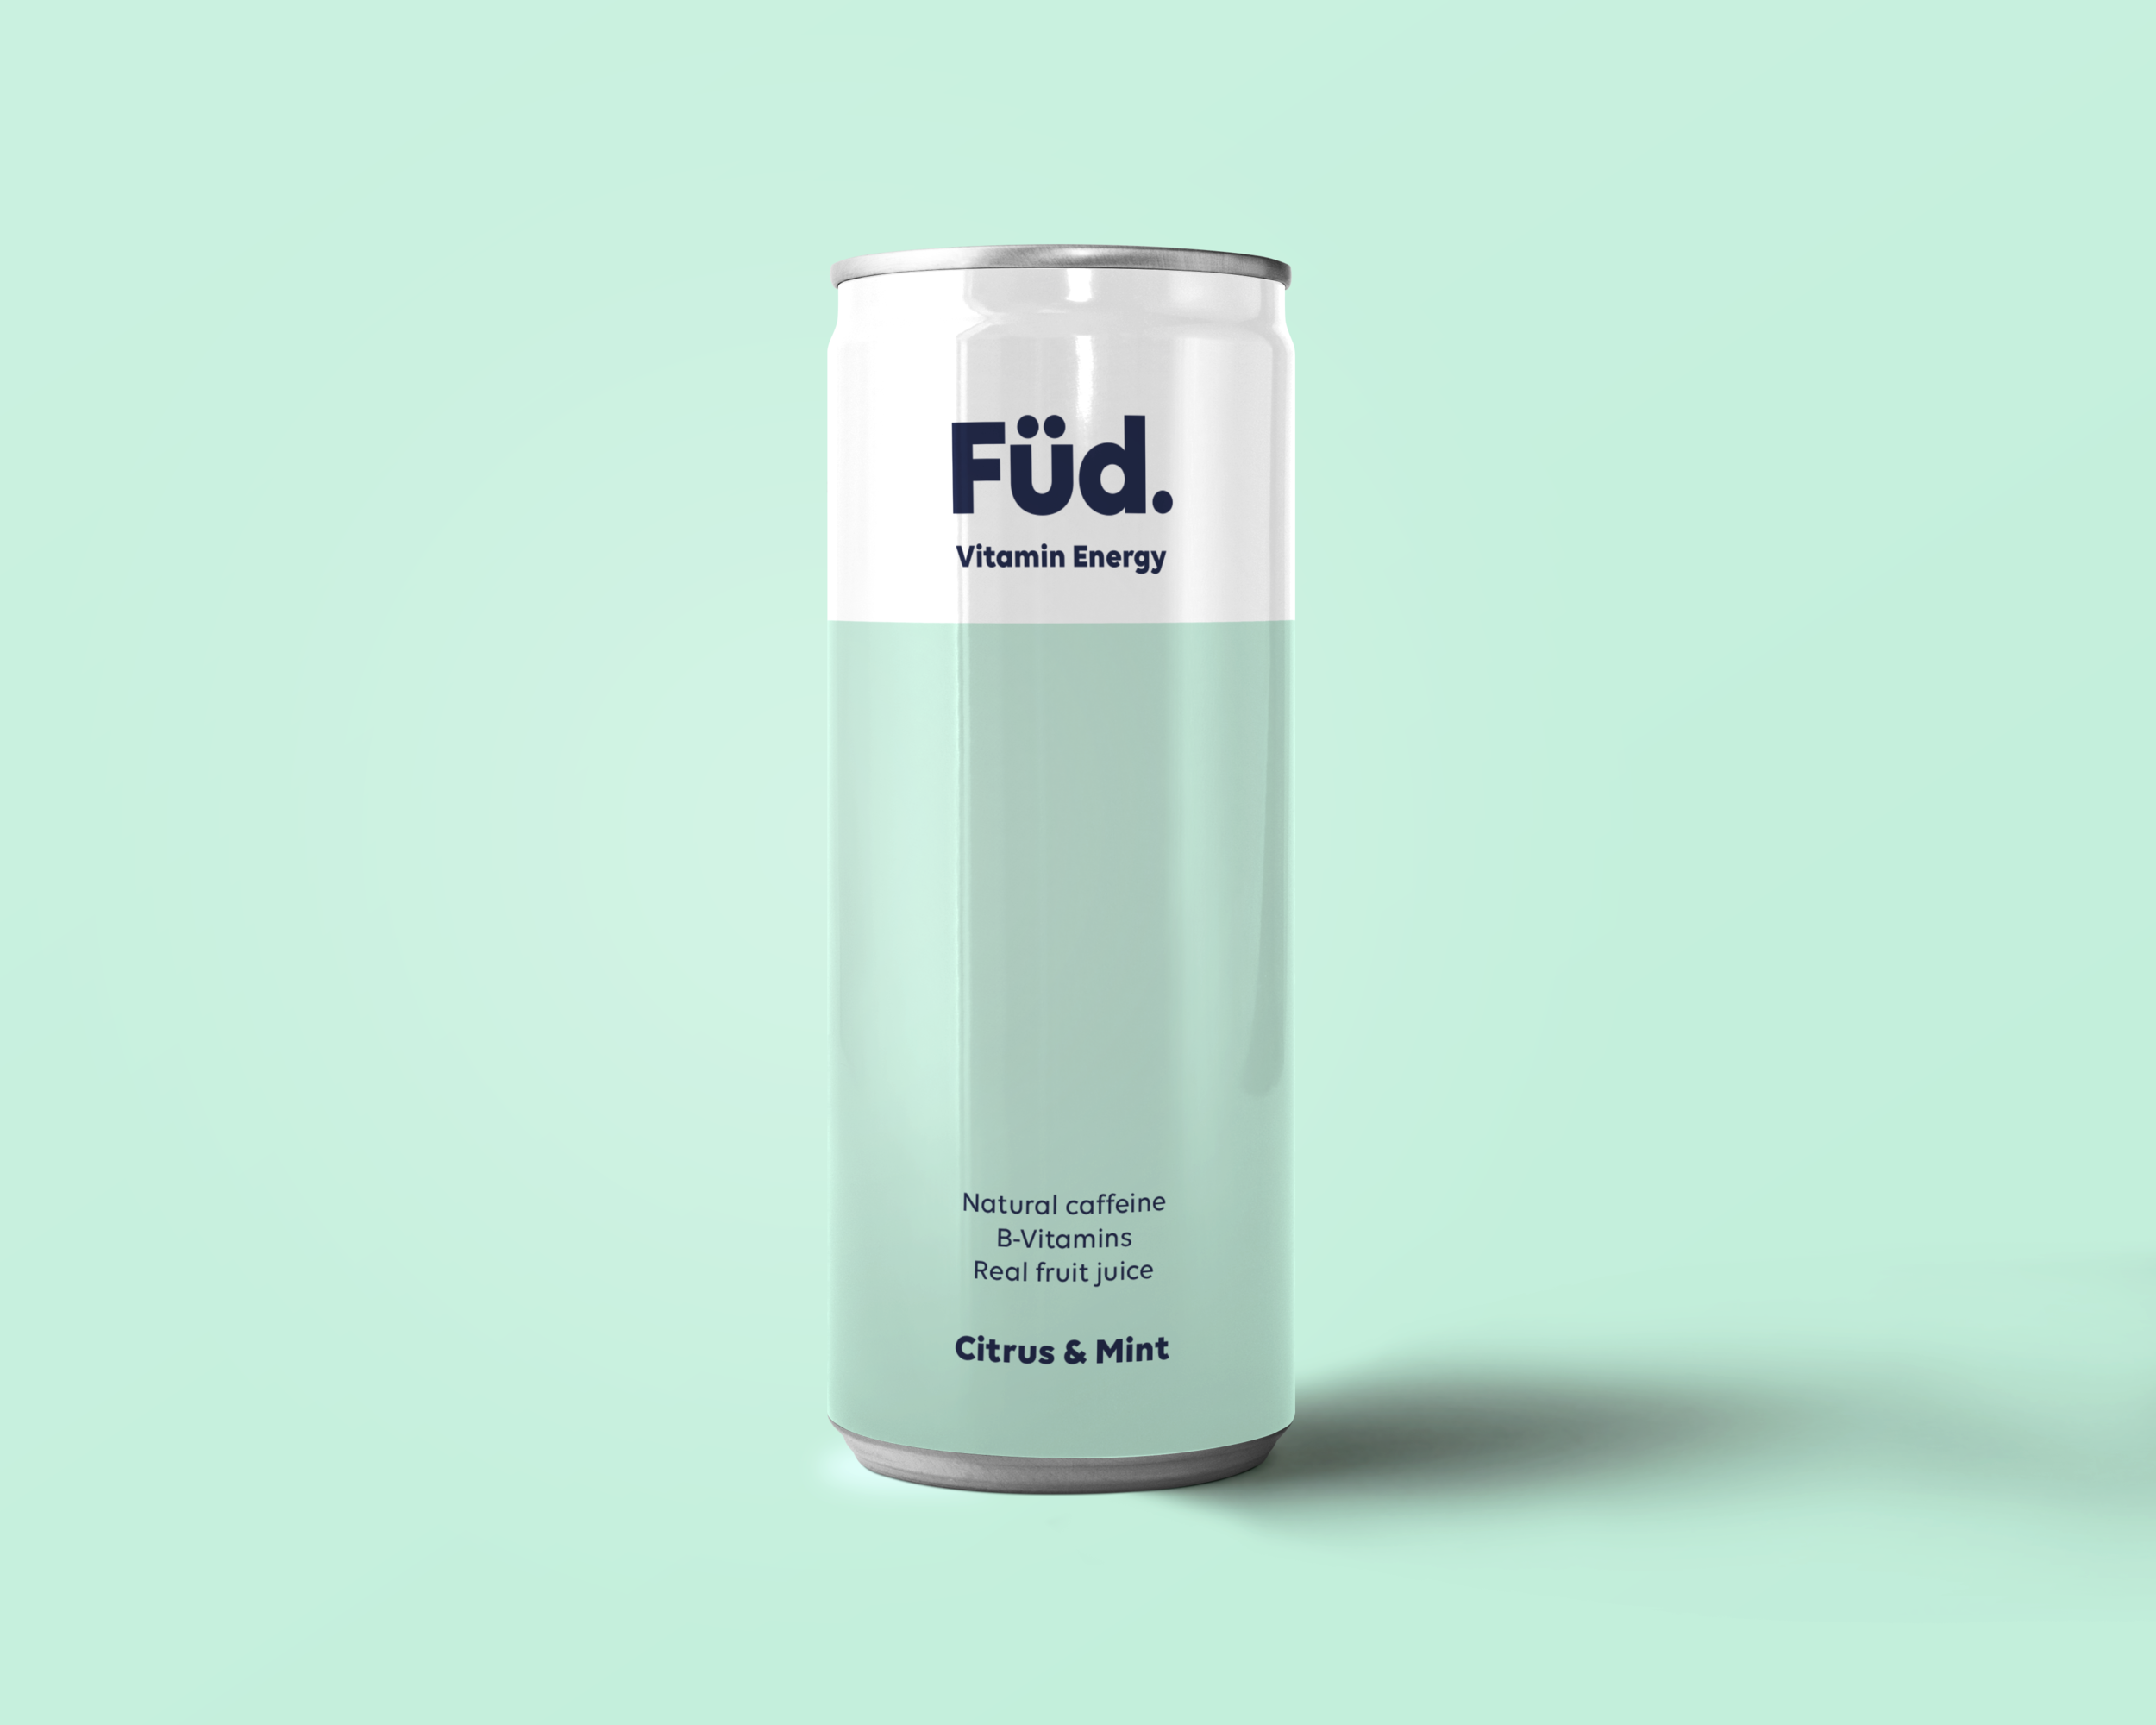 Packaging-designer-Drink packaging design for Füd vitamin energy